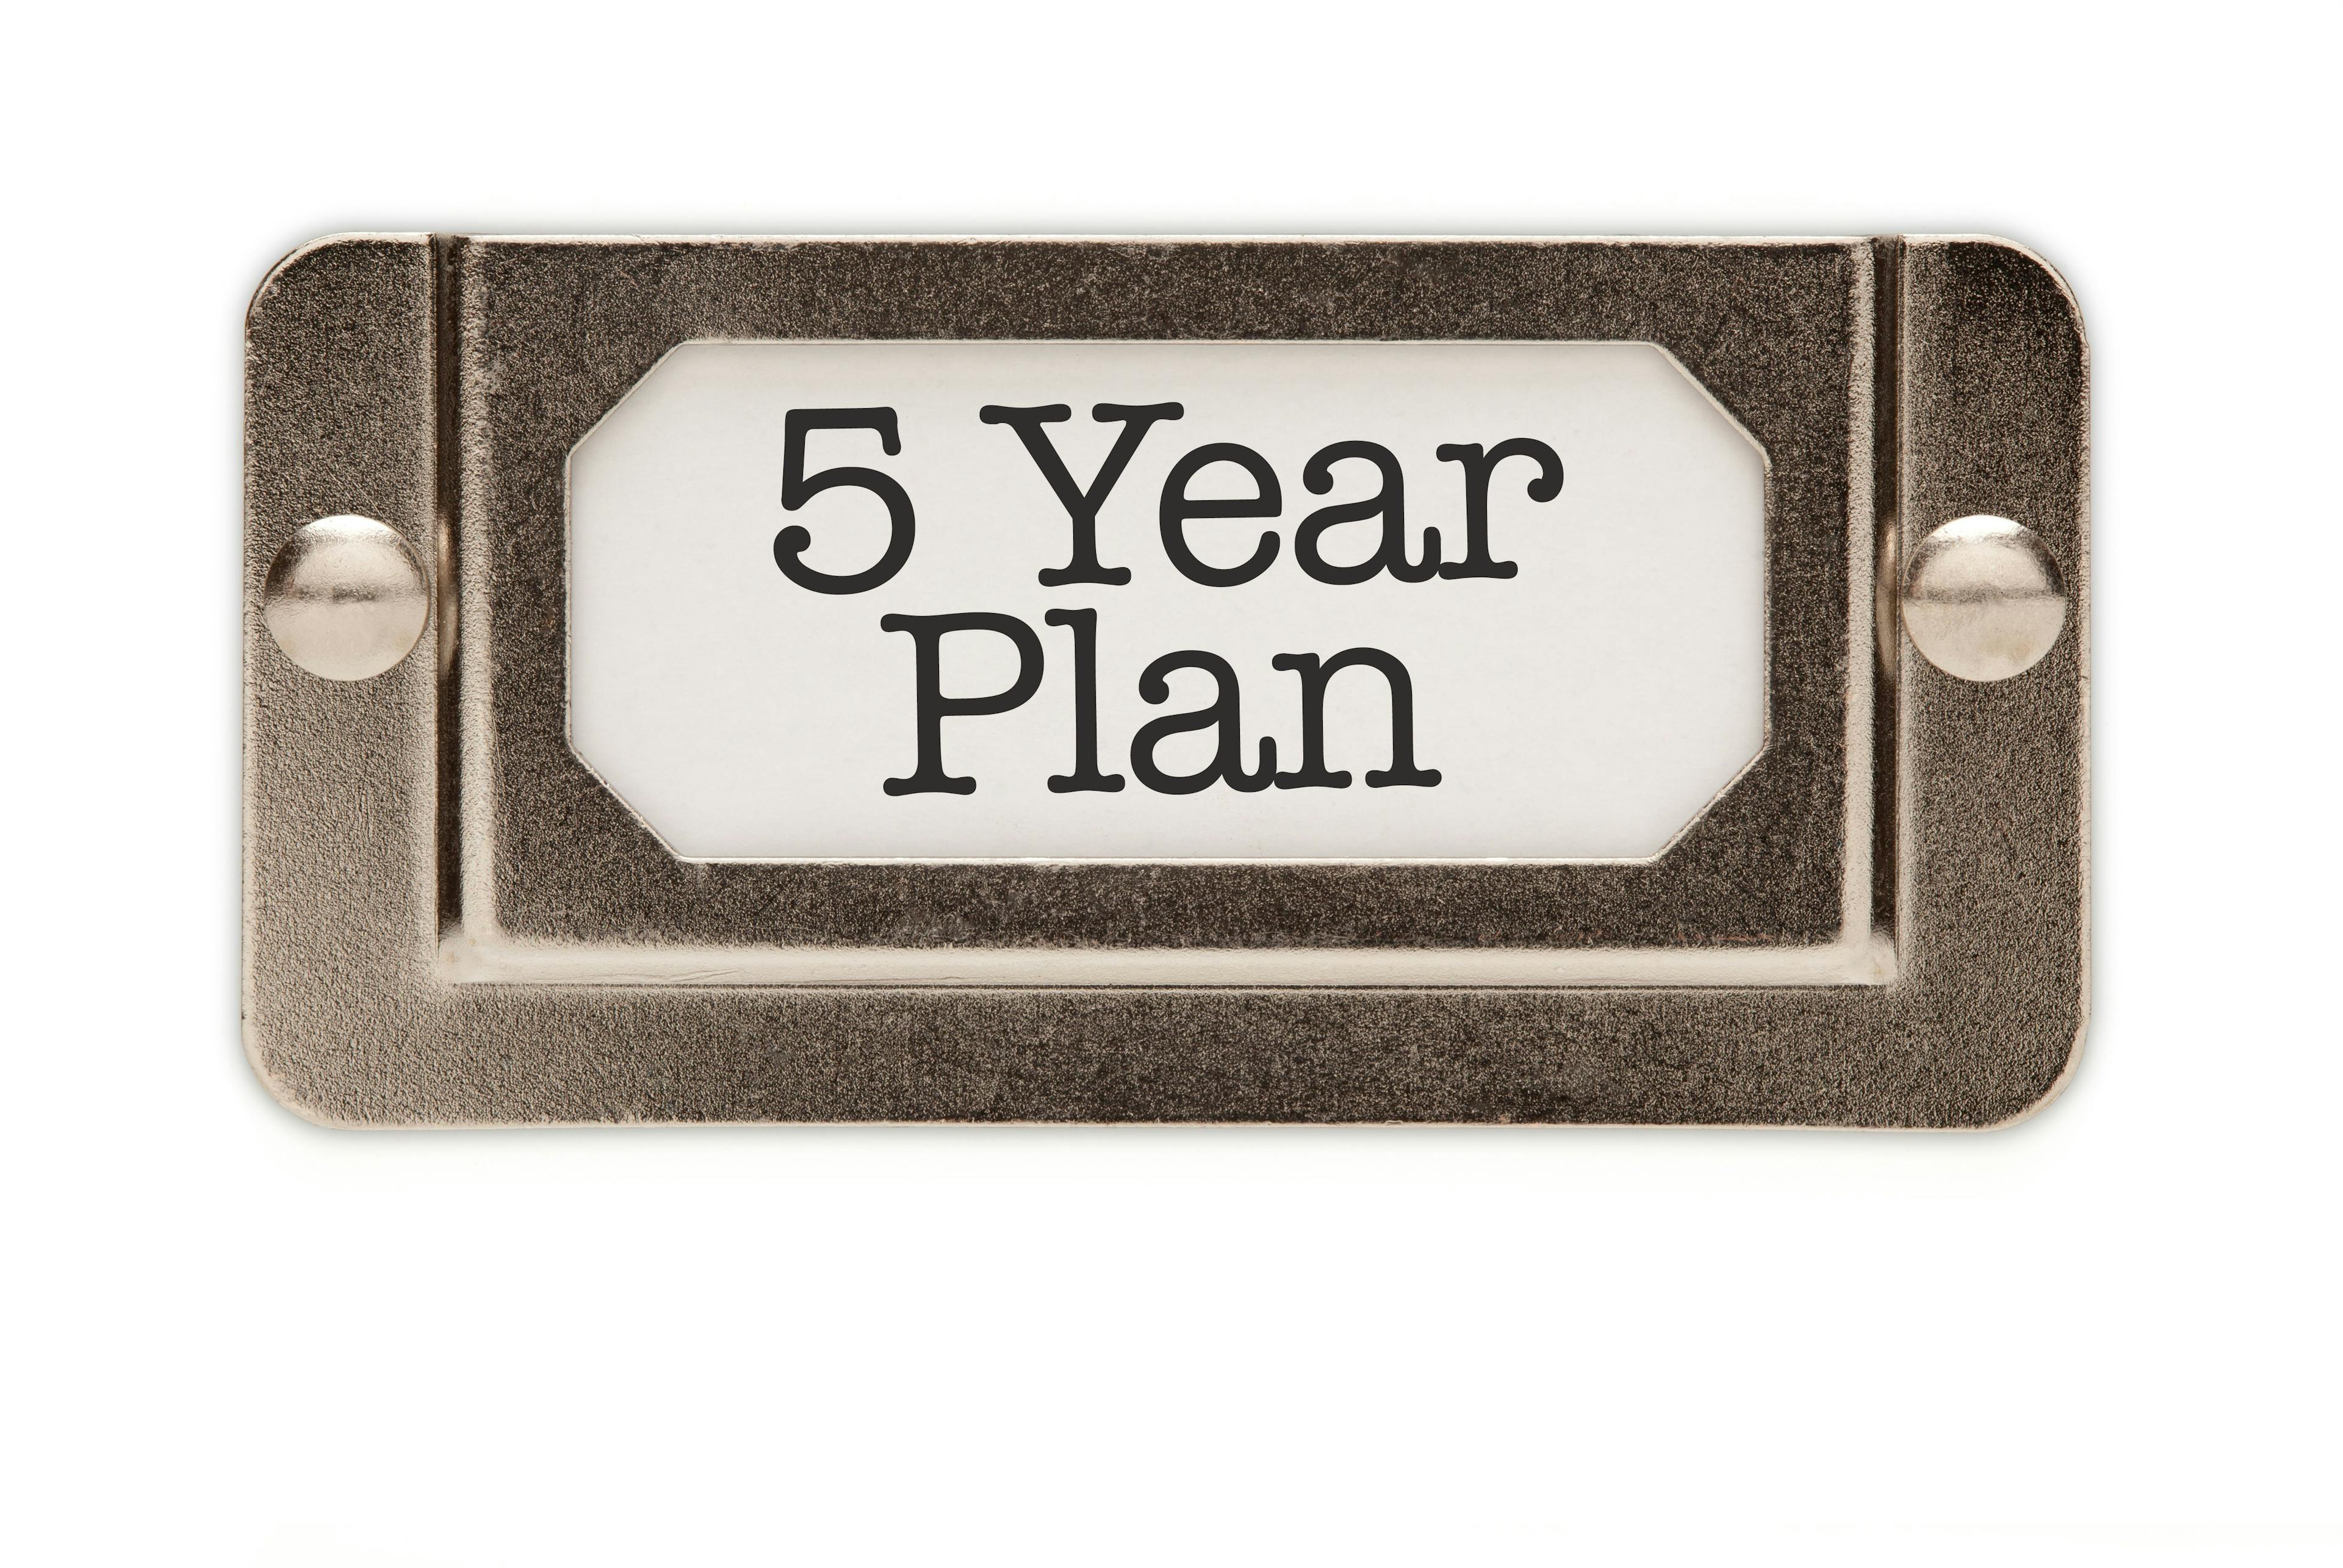 5 year plan file cabinet door